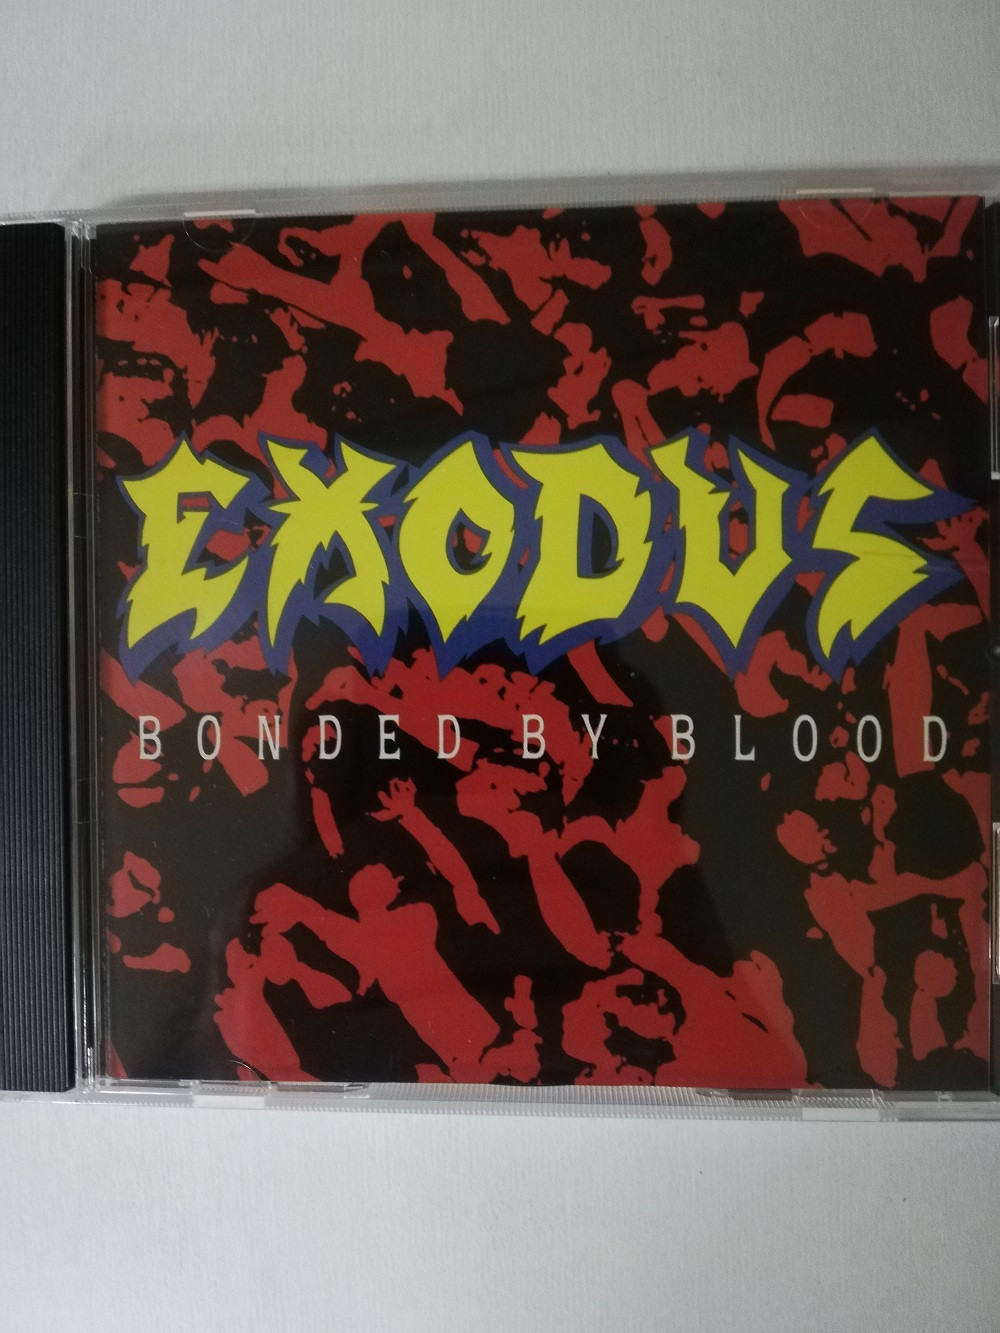 Imagen CD EXODUS - BONDED BY BLOOD 1